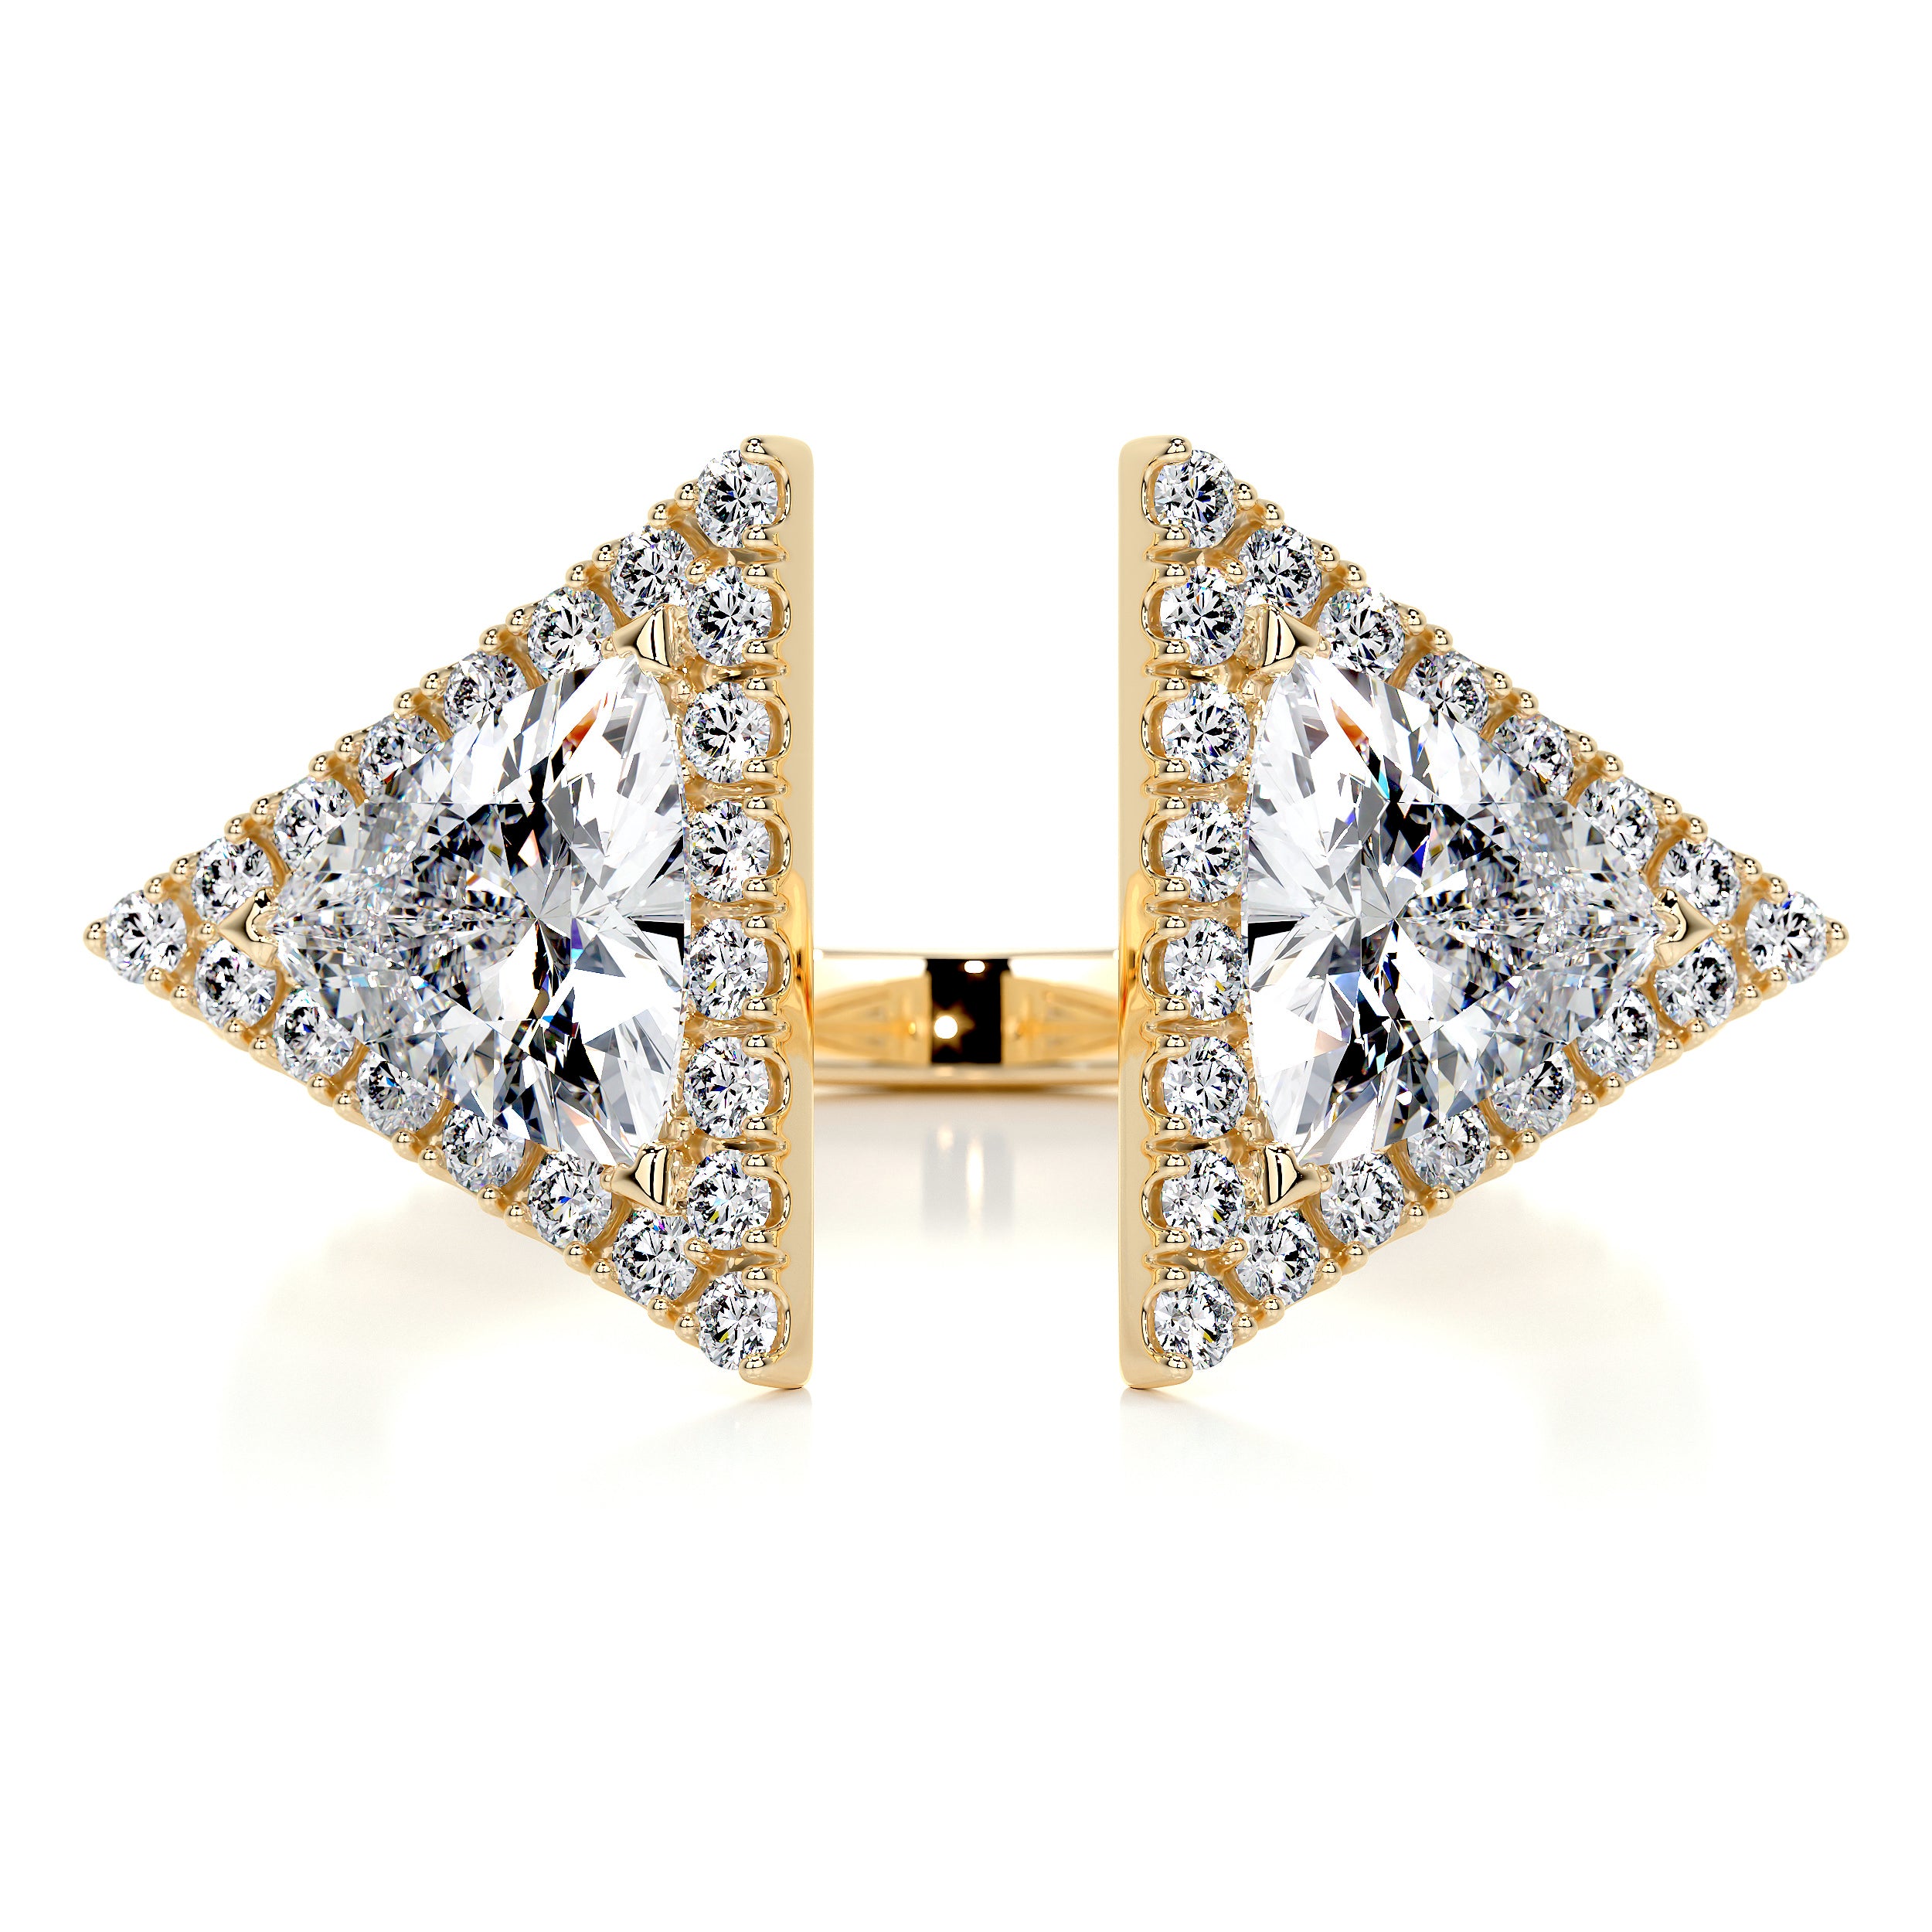 Jade Fashion Diamond Ring   (1.5 carat) -18K Yellow Gold